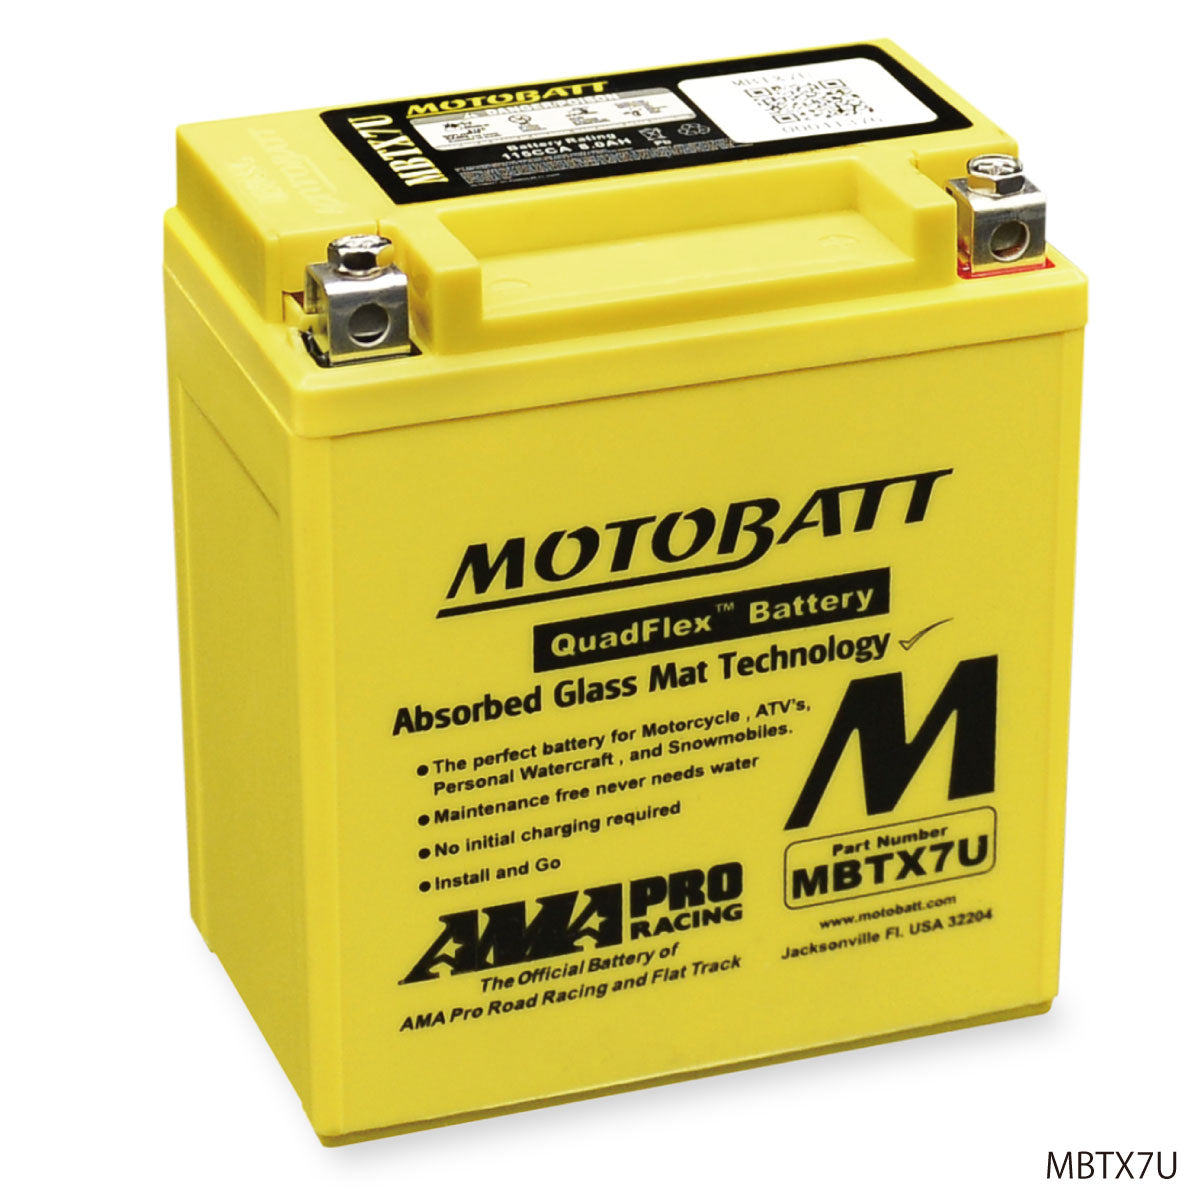 Battery MBTX7U Motobat Bike Motorcycle Initial Charged Ready to Use Maintenance Free MOTOBATT